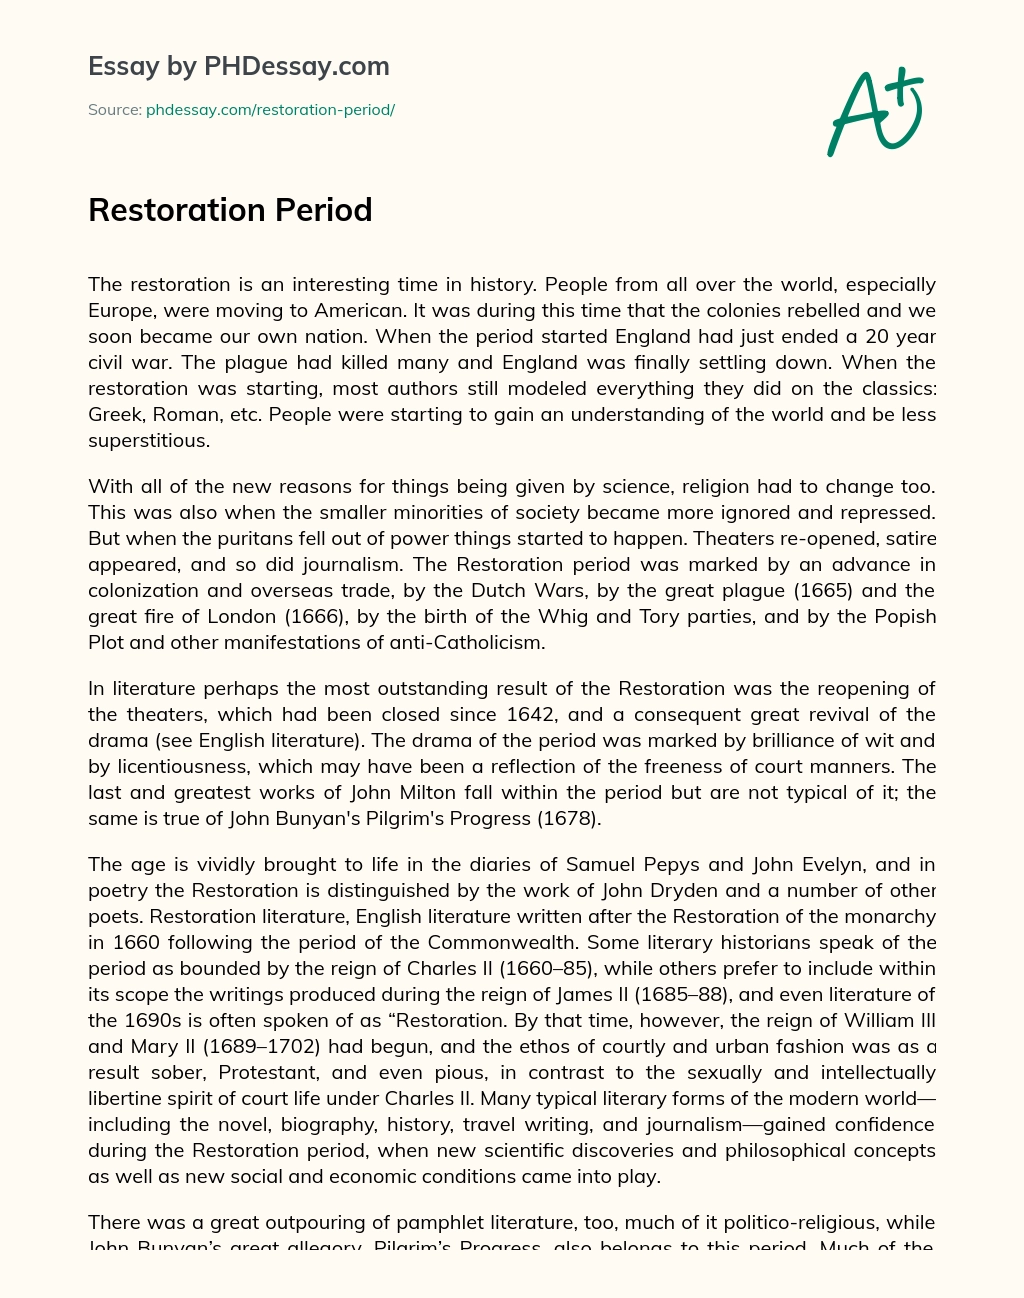 Restoration Period essay